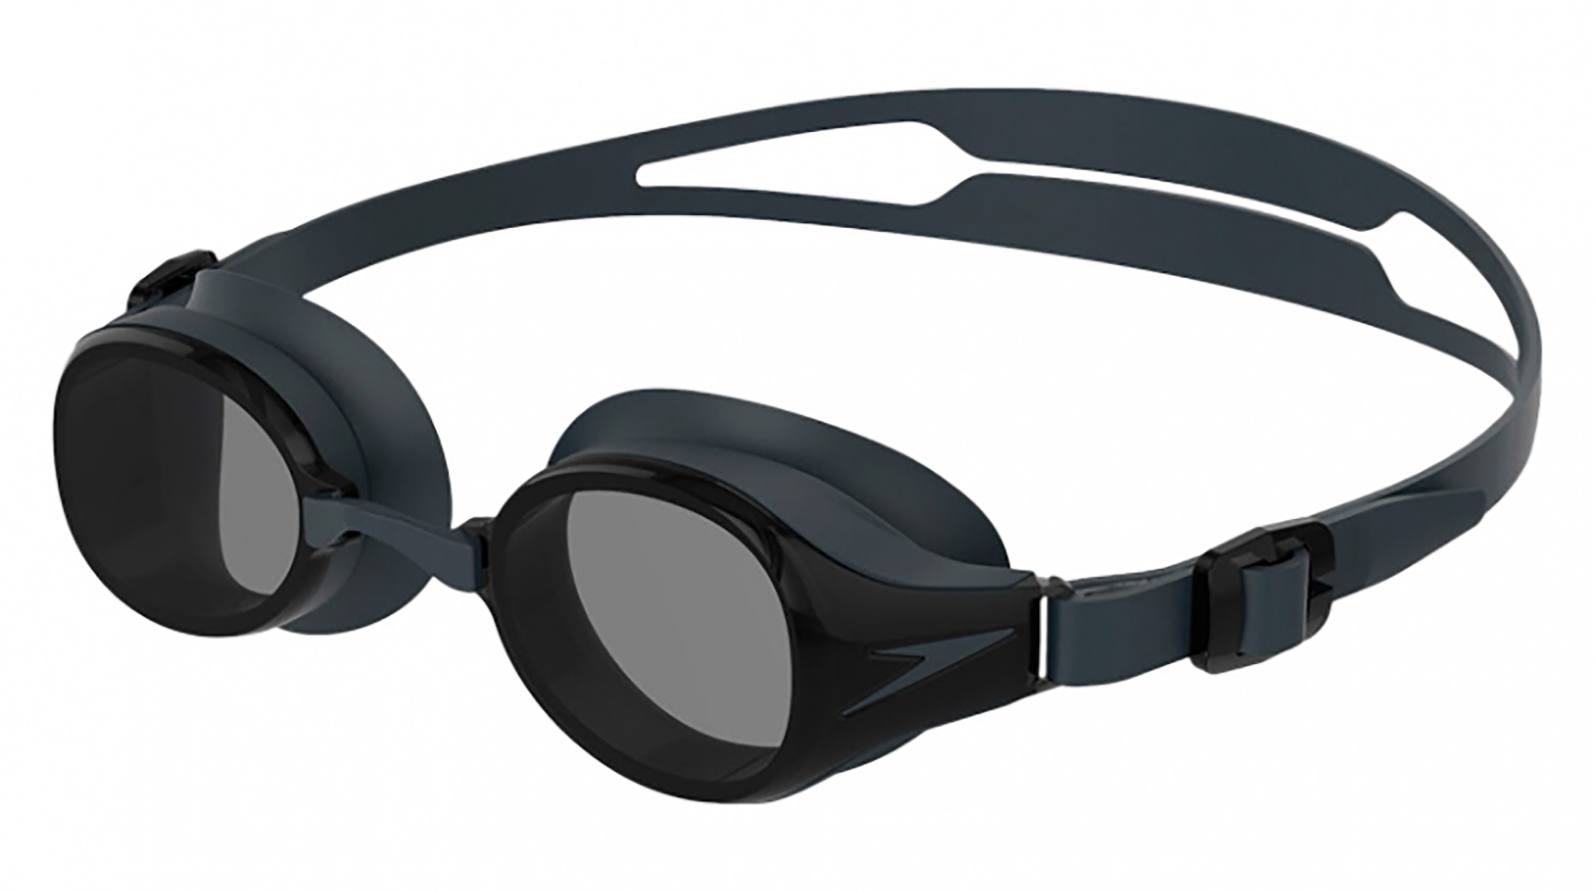 Speedo Очки для плавания Hydropure Optical F808 -2,5 speedo очки для плавания hydropure optical f809 3 5